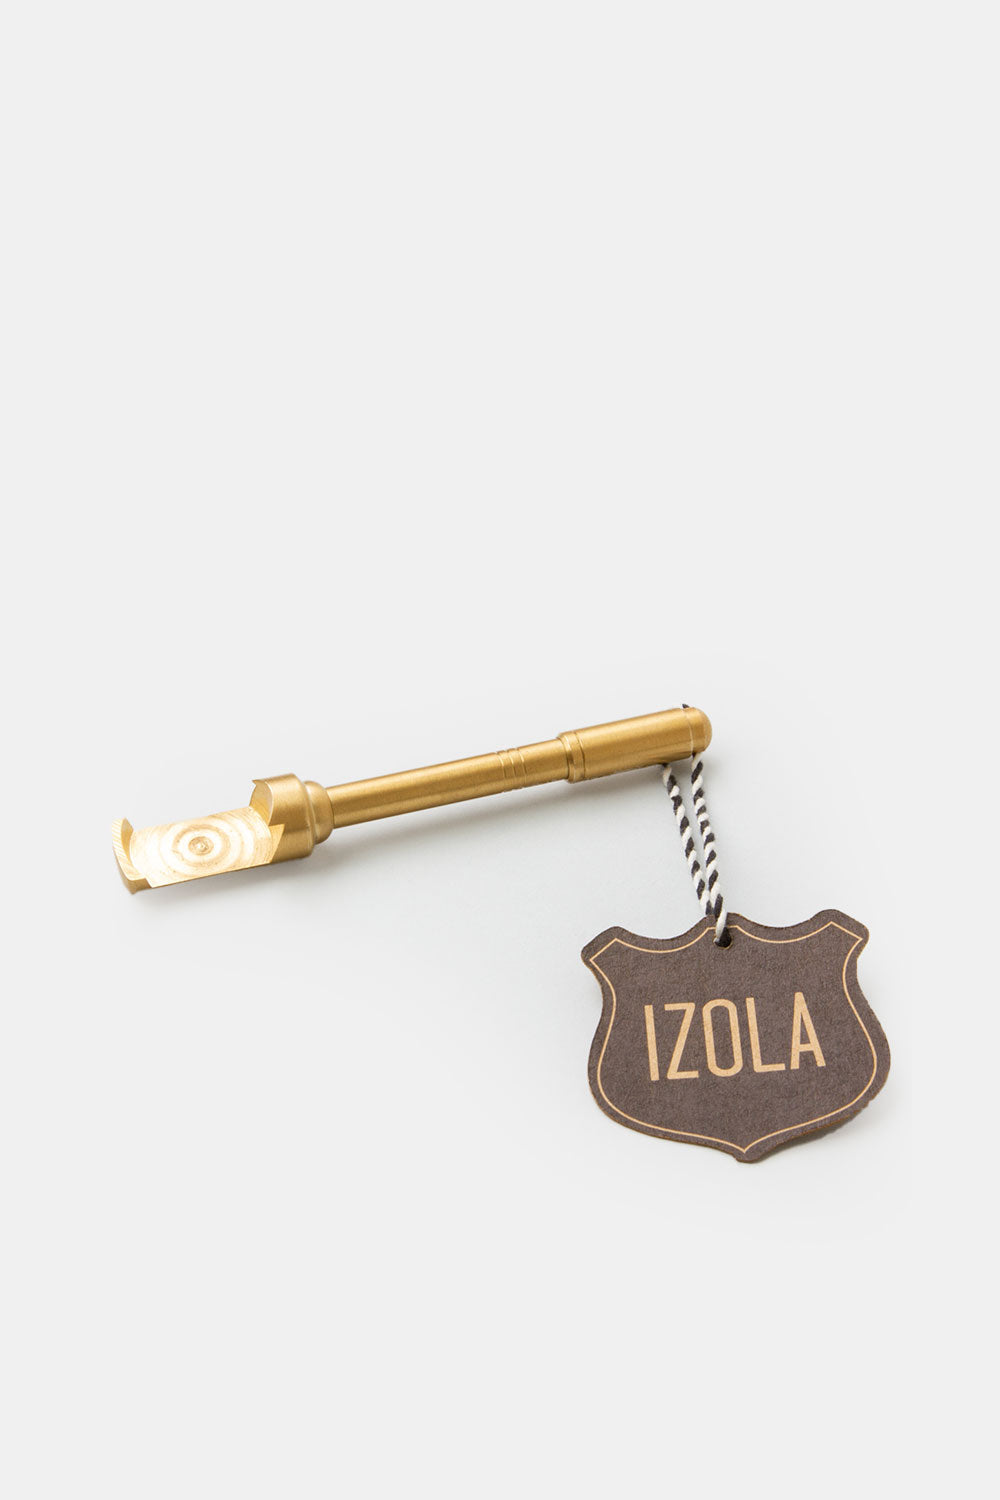 Izola Bottle Opener (Brass)